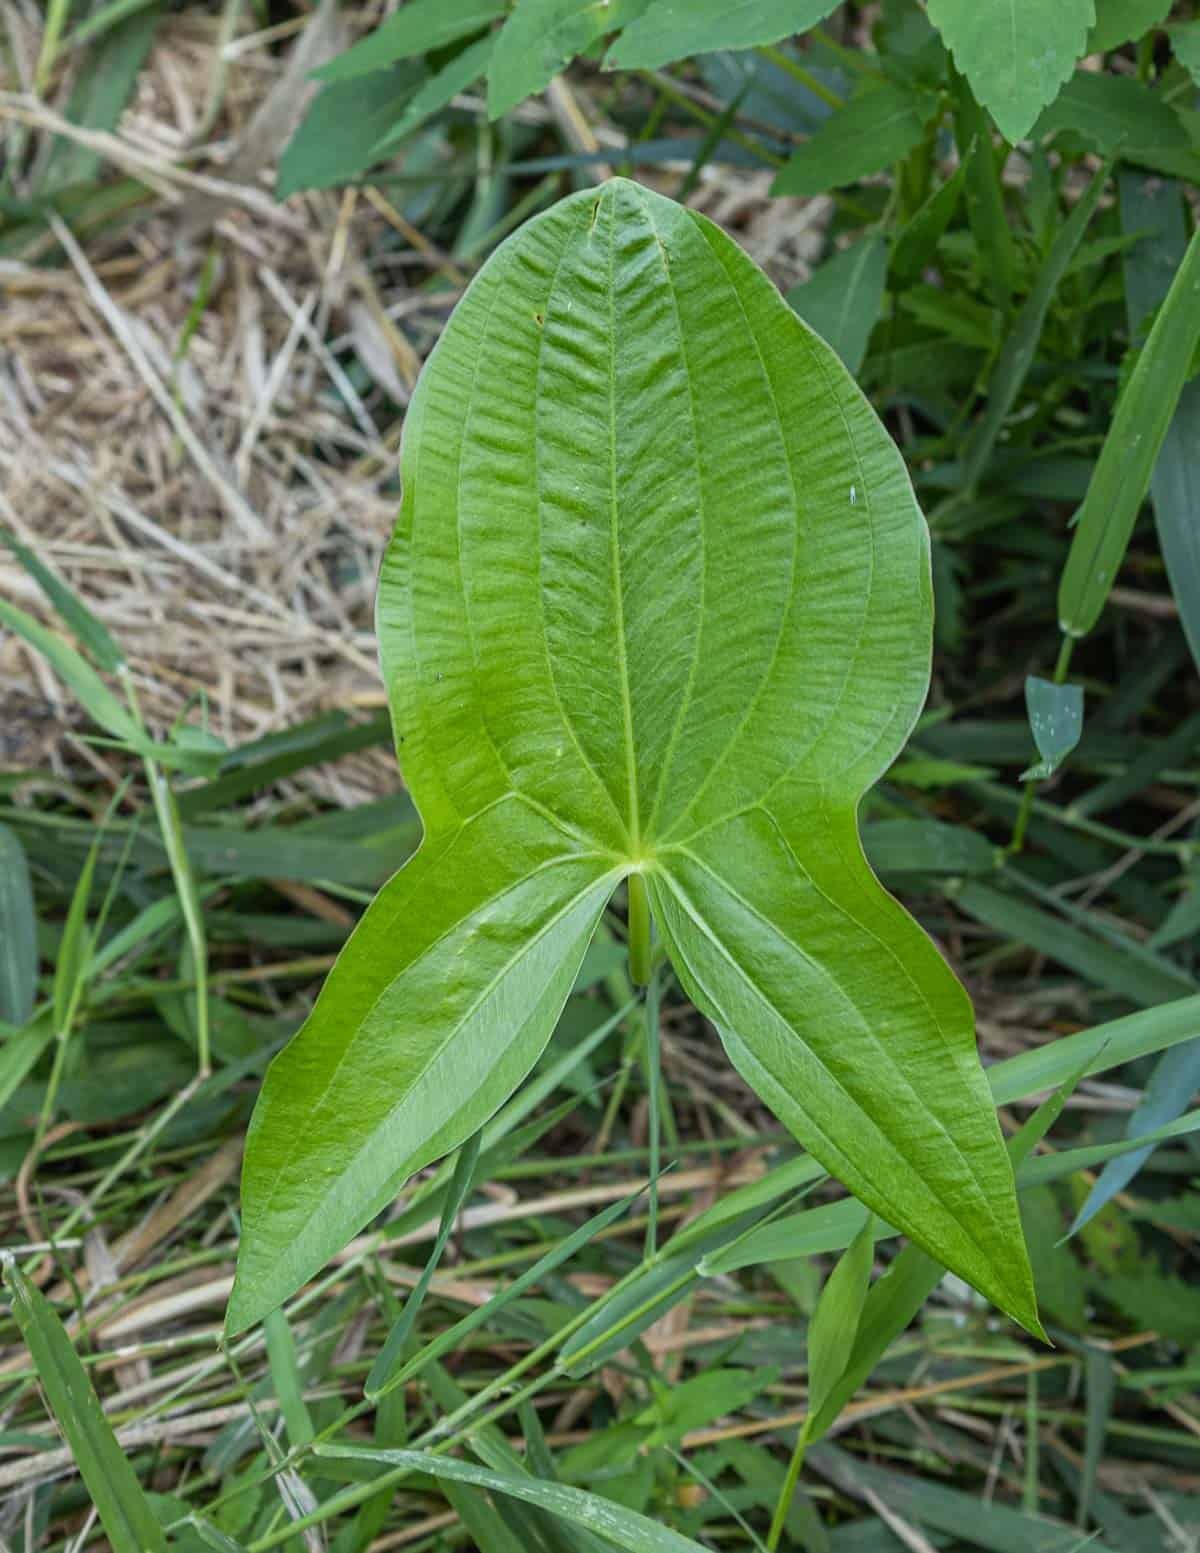 Broadleaf arrowhead leaf of the katniss plant growing in a pond in the summer (Sagittaria latifolia).